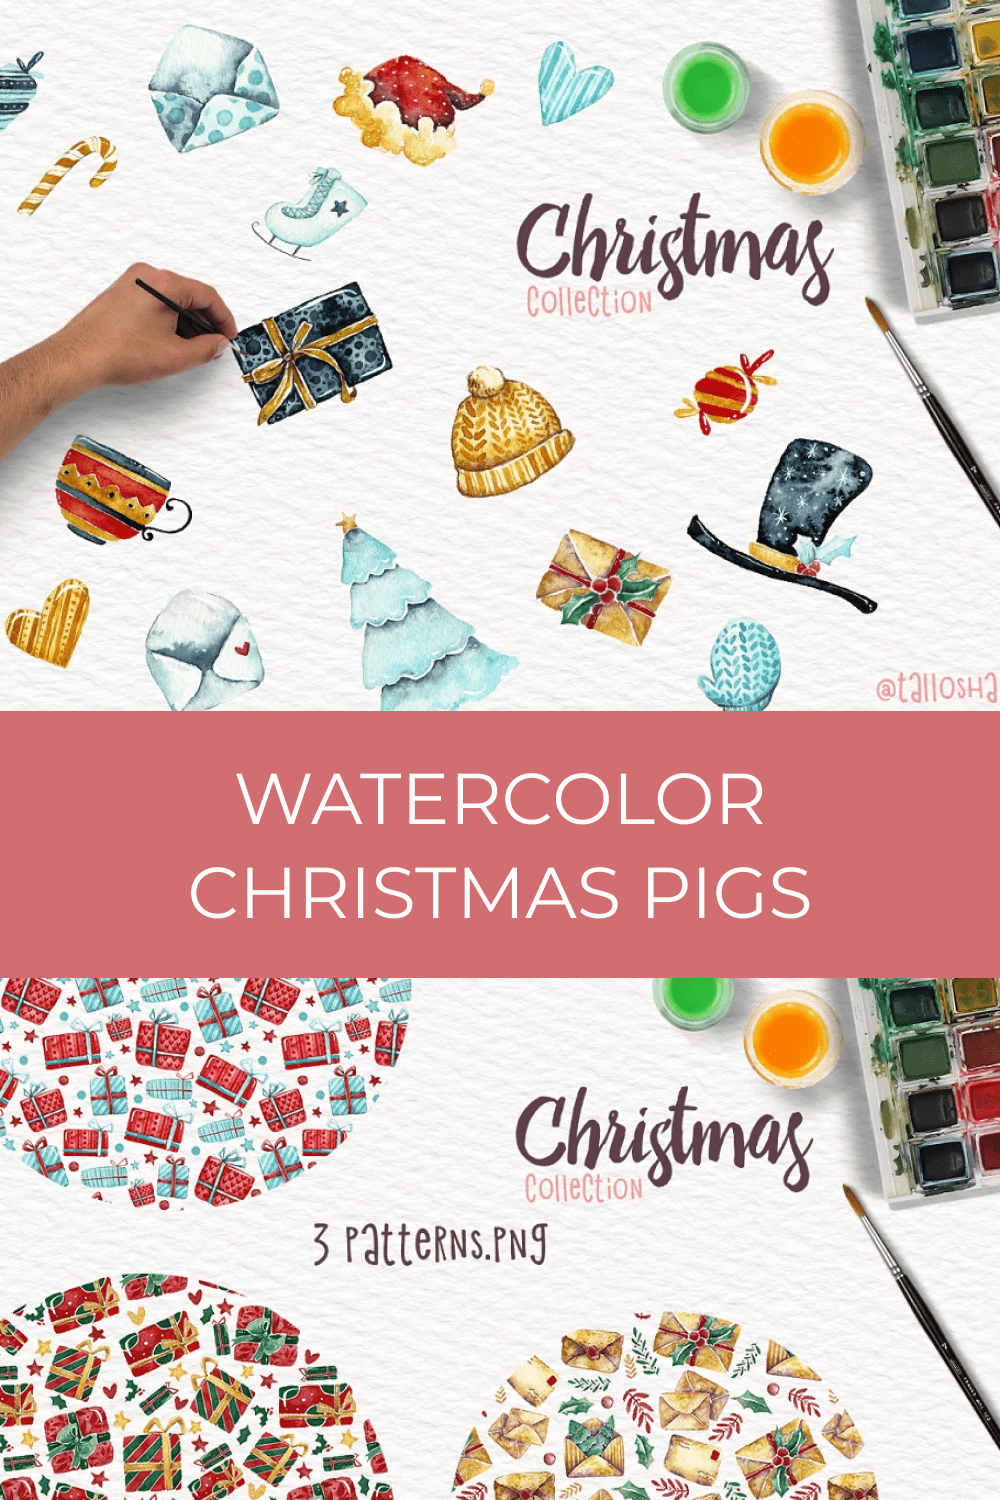 Watercolor Christmas Pigs.